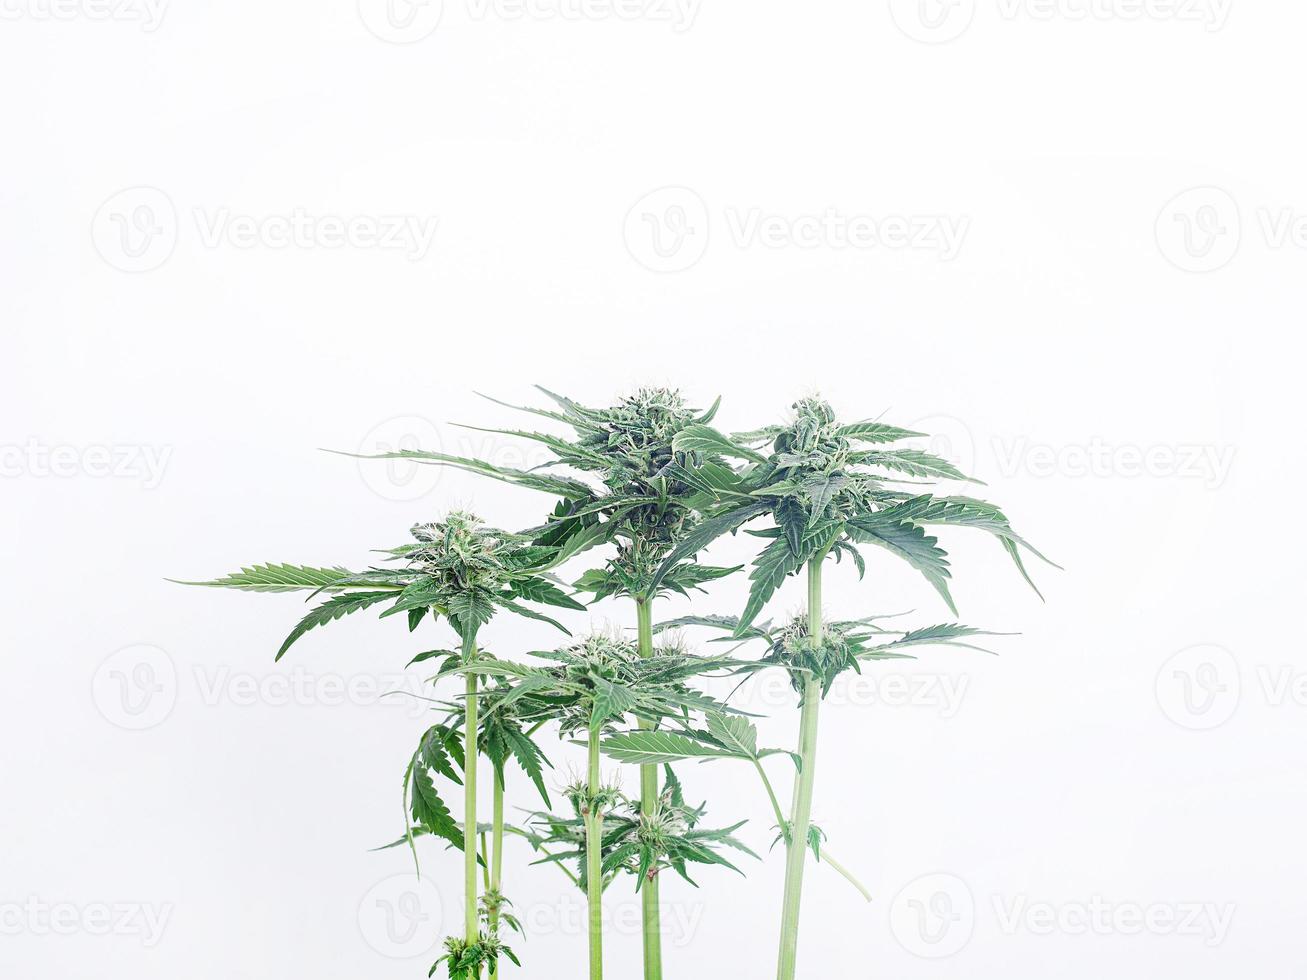 blommande cannabisbuske på vit bakgrund foto